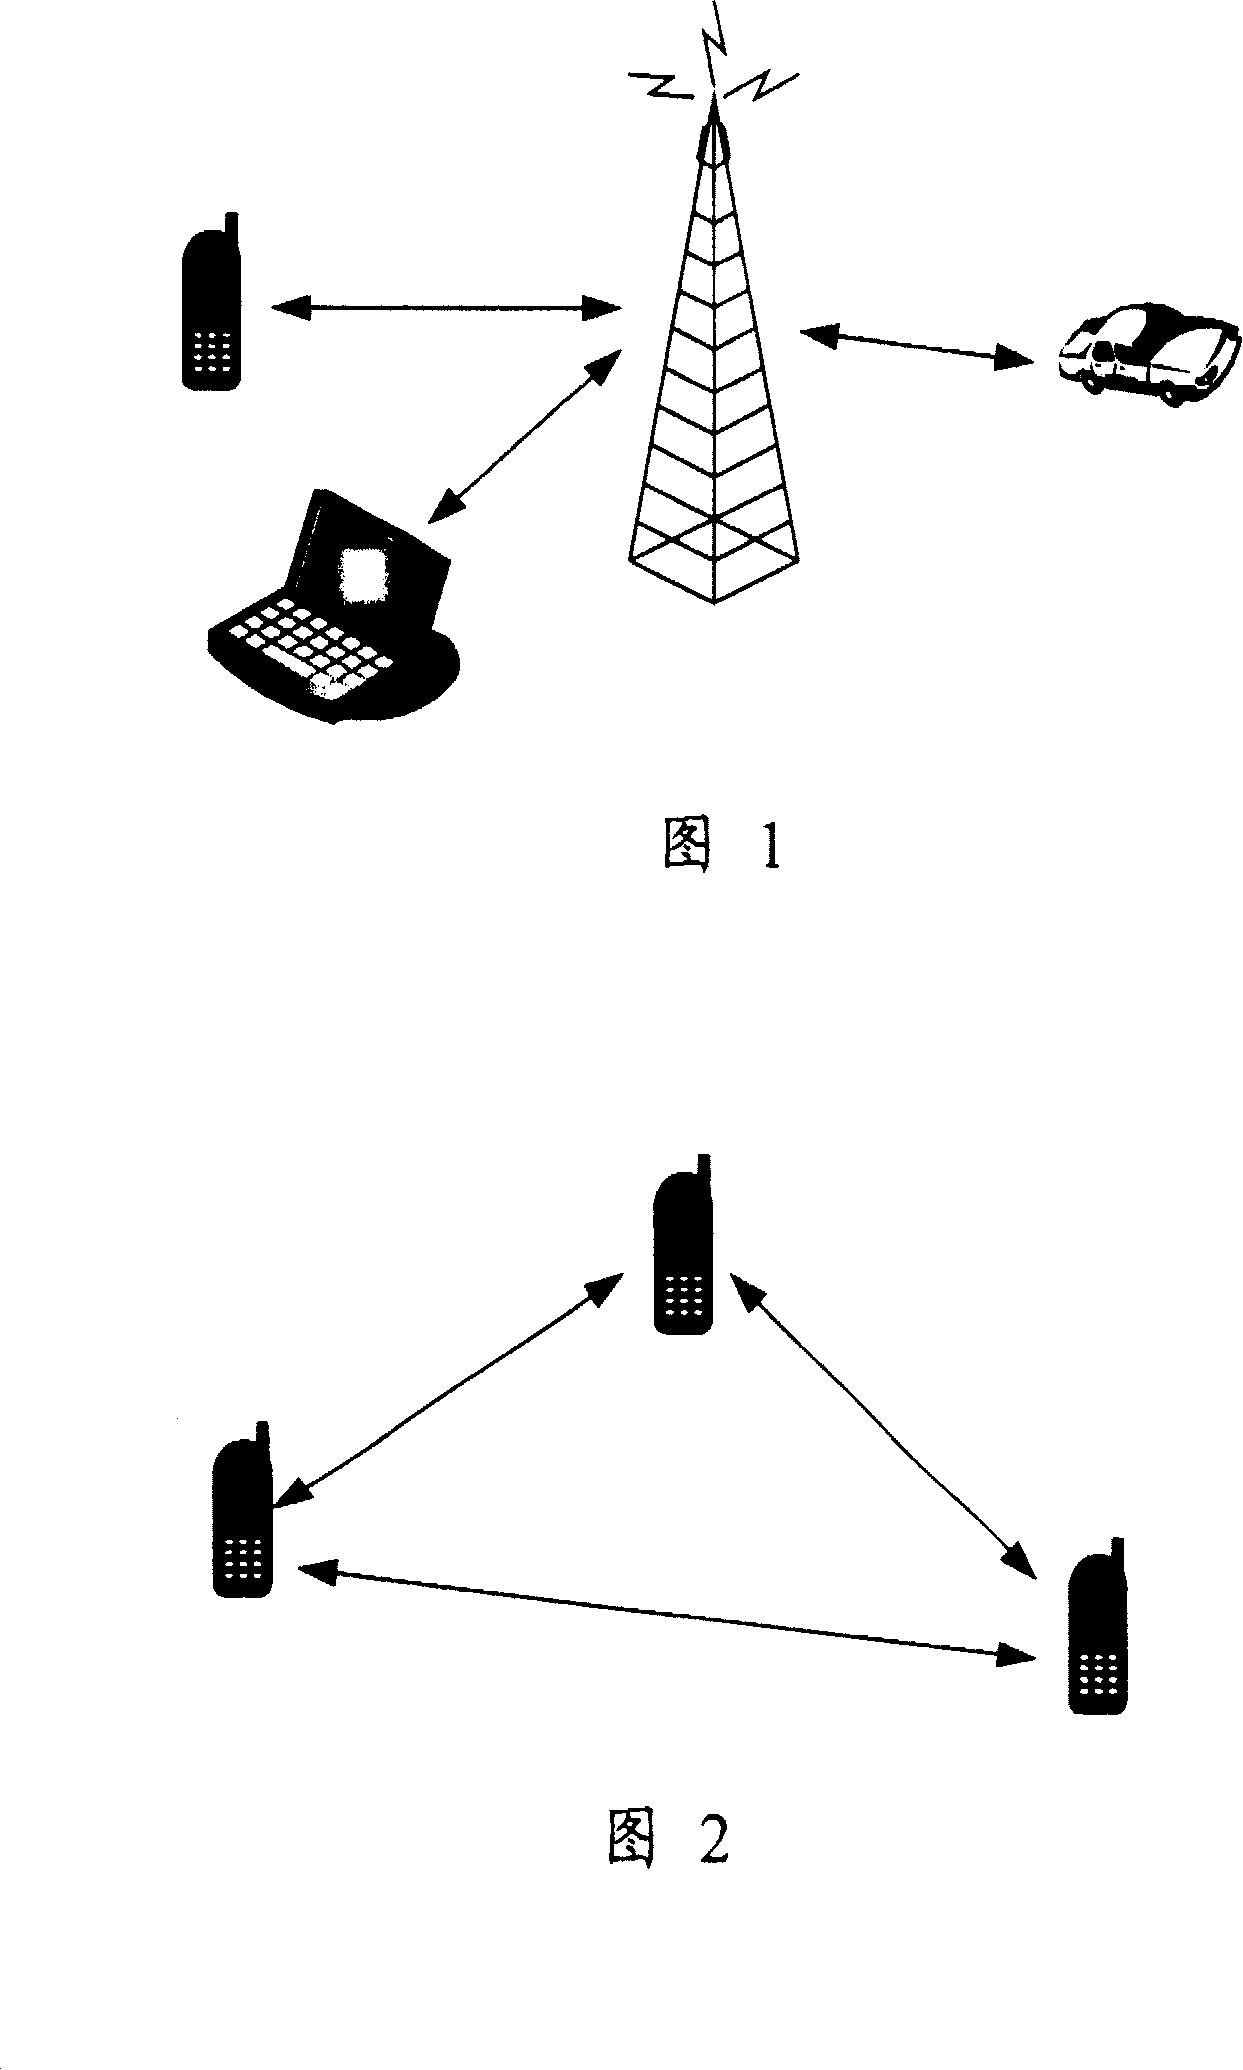 Method for implementing transmission of information